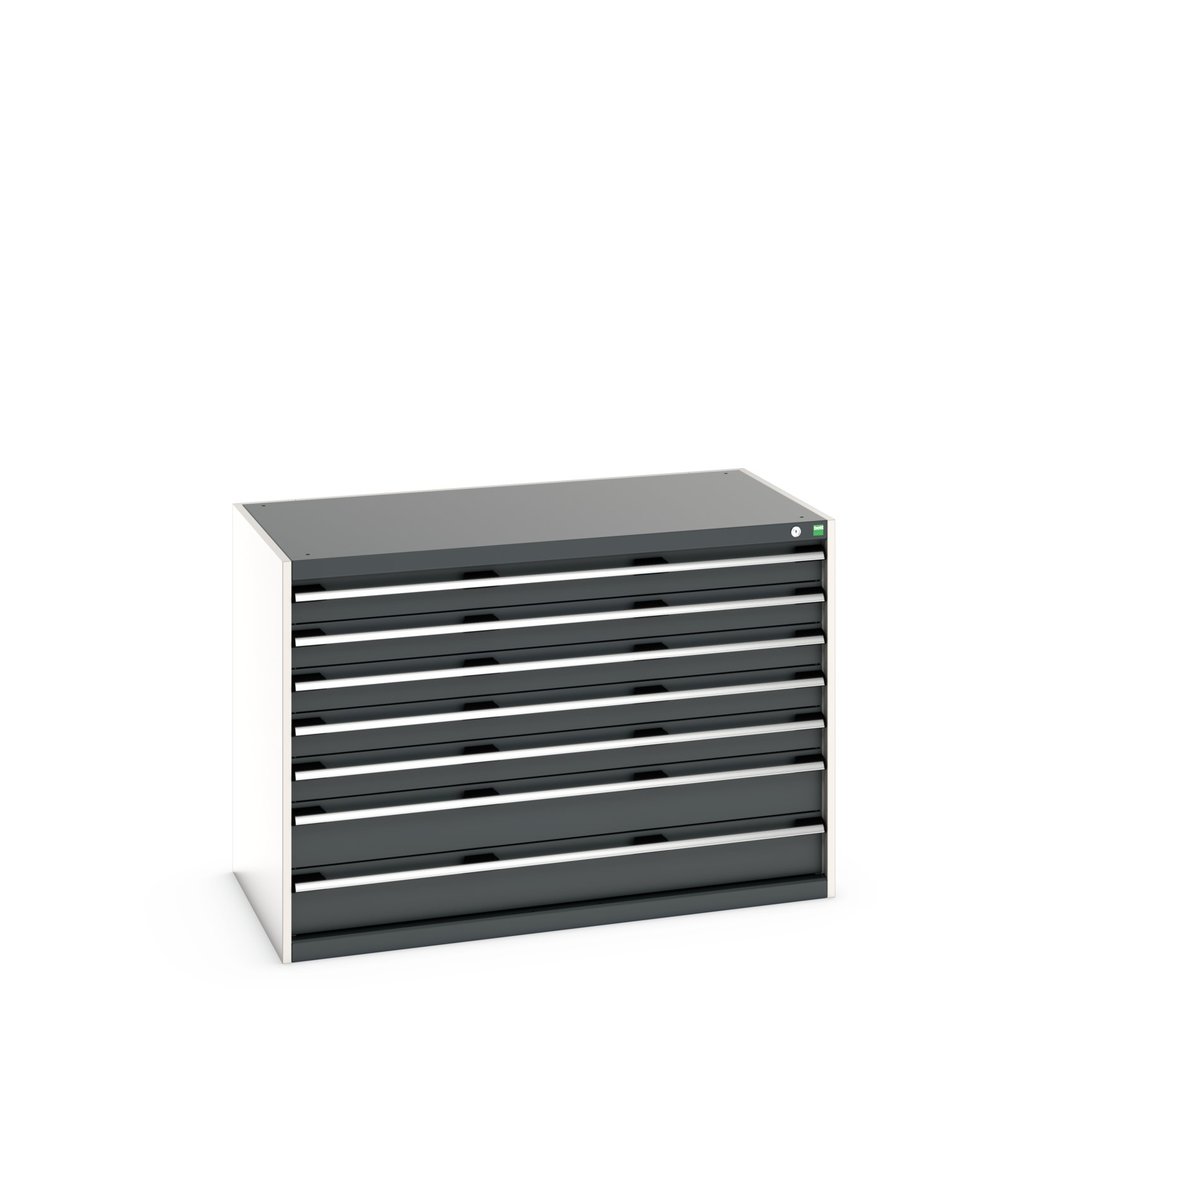 40030088. - cubio drawer cabinet